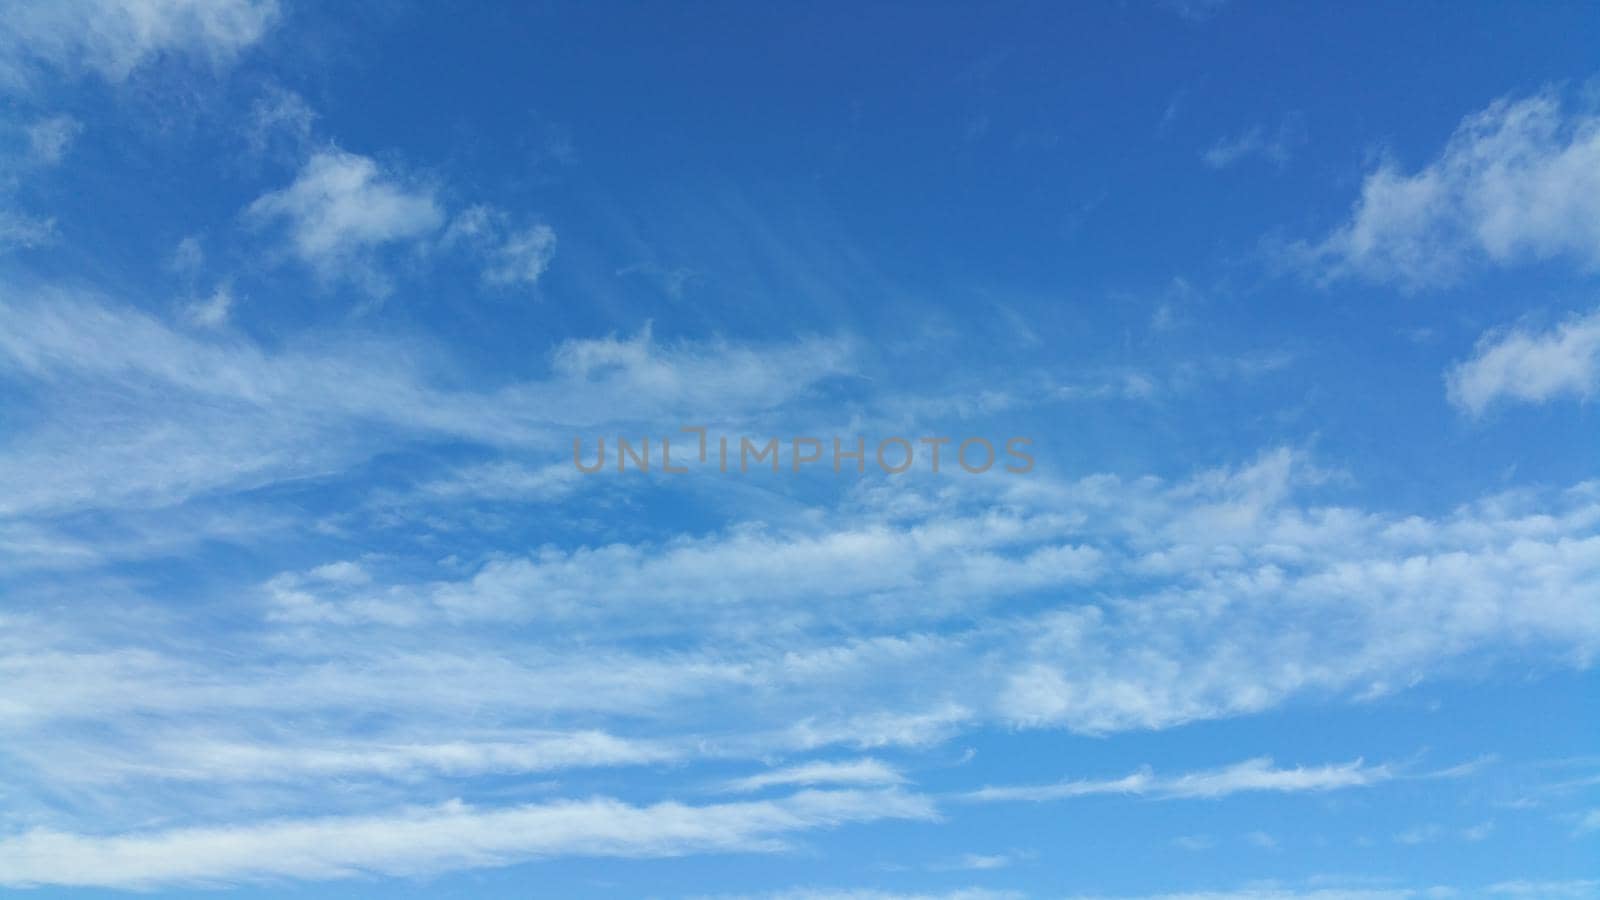 blue sky with white clouds by zakob337